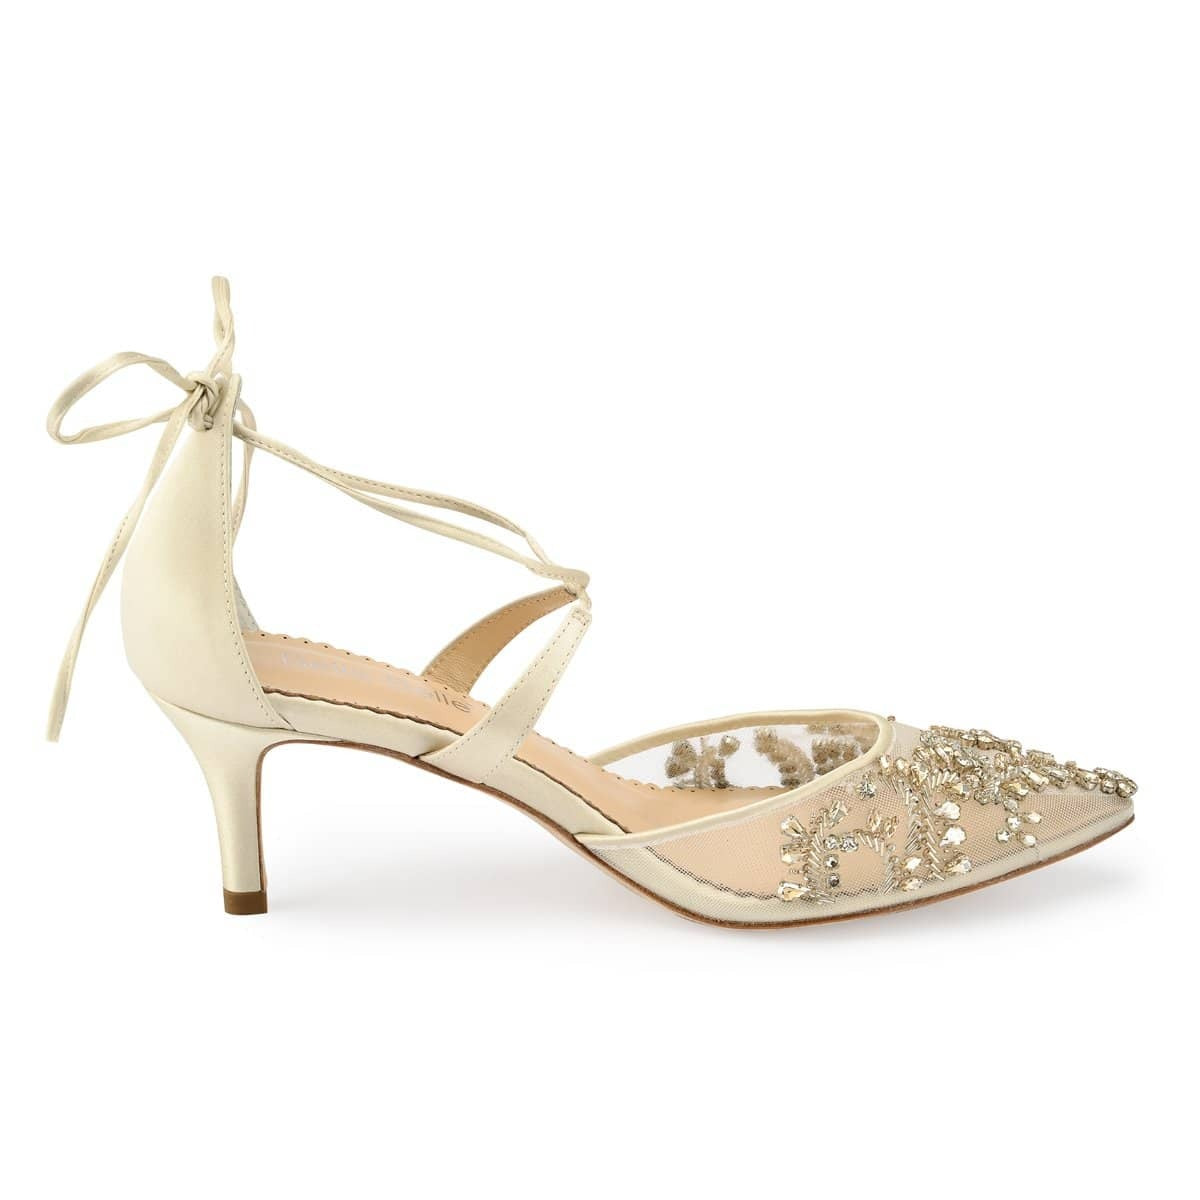 Frances Crystal Studded Bridal Heels in Champagne Gold